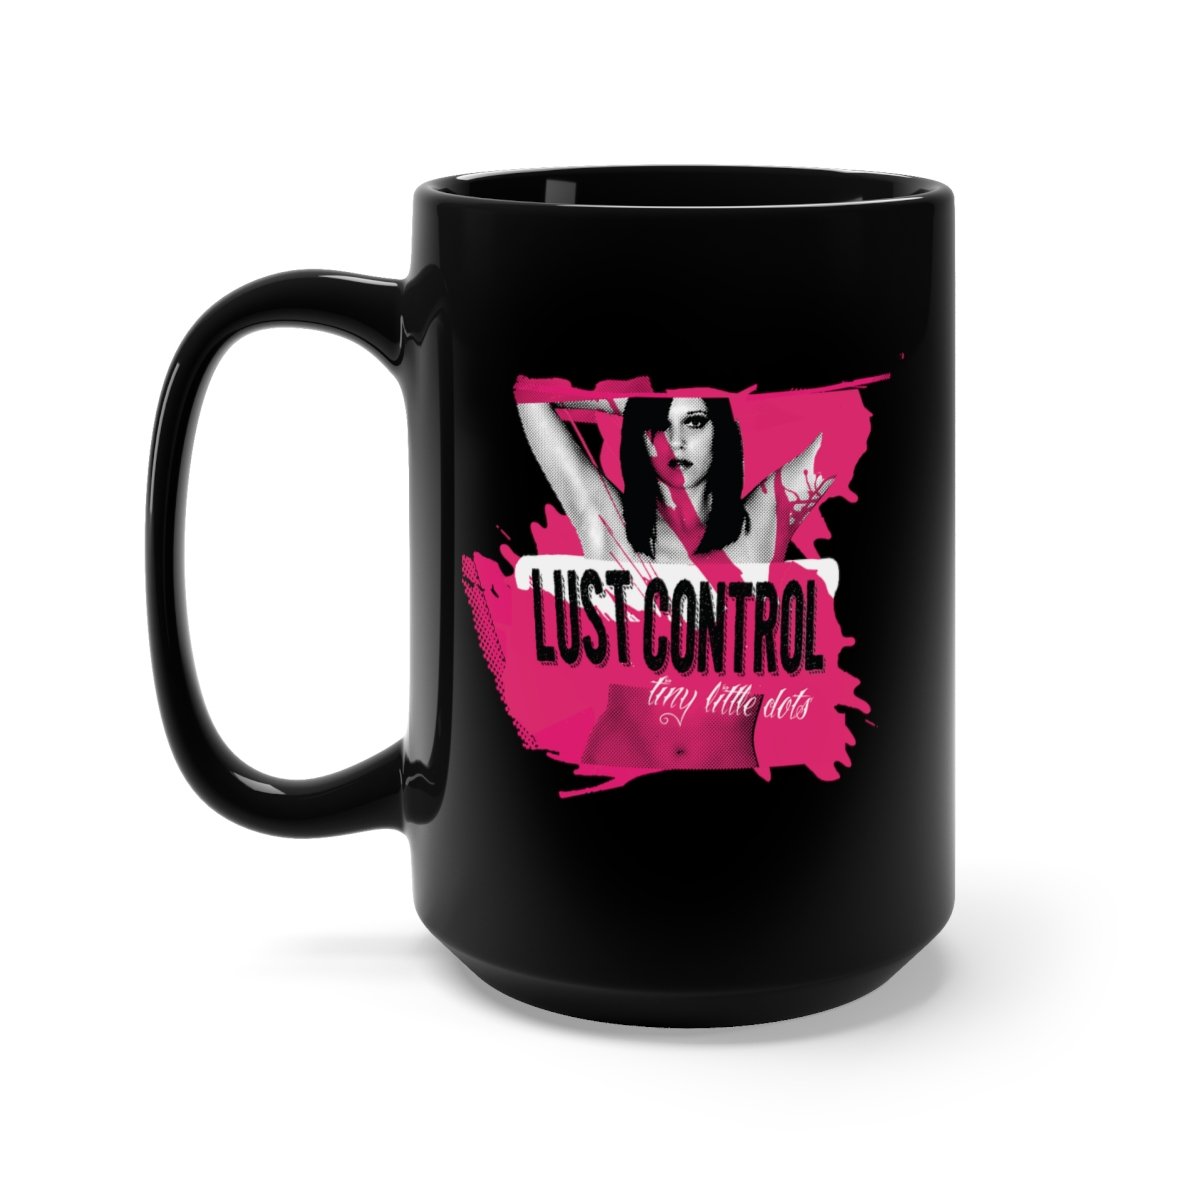 Lust Control – Tiny Little Dots 15oz Black Mug